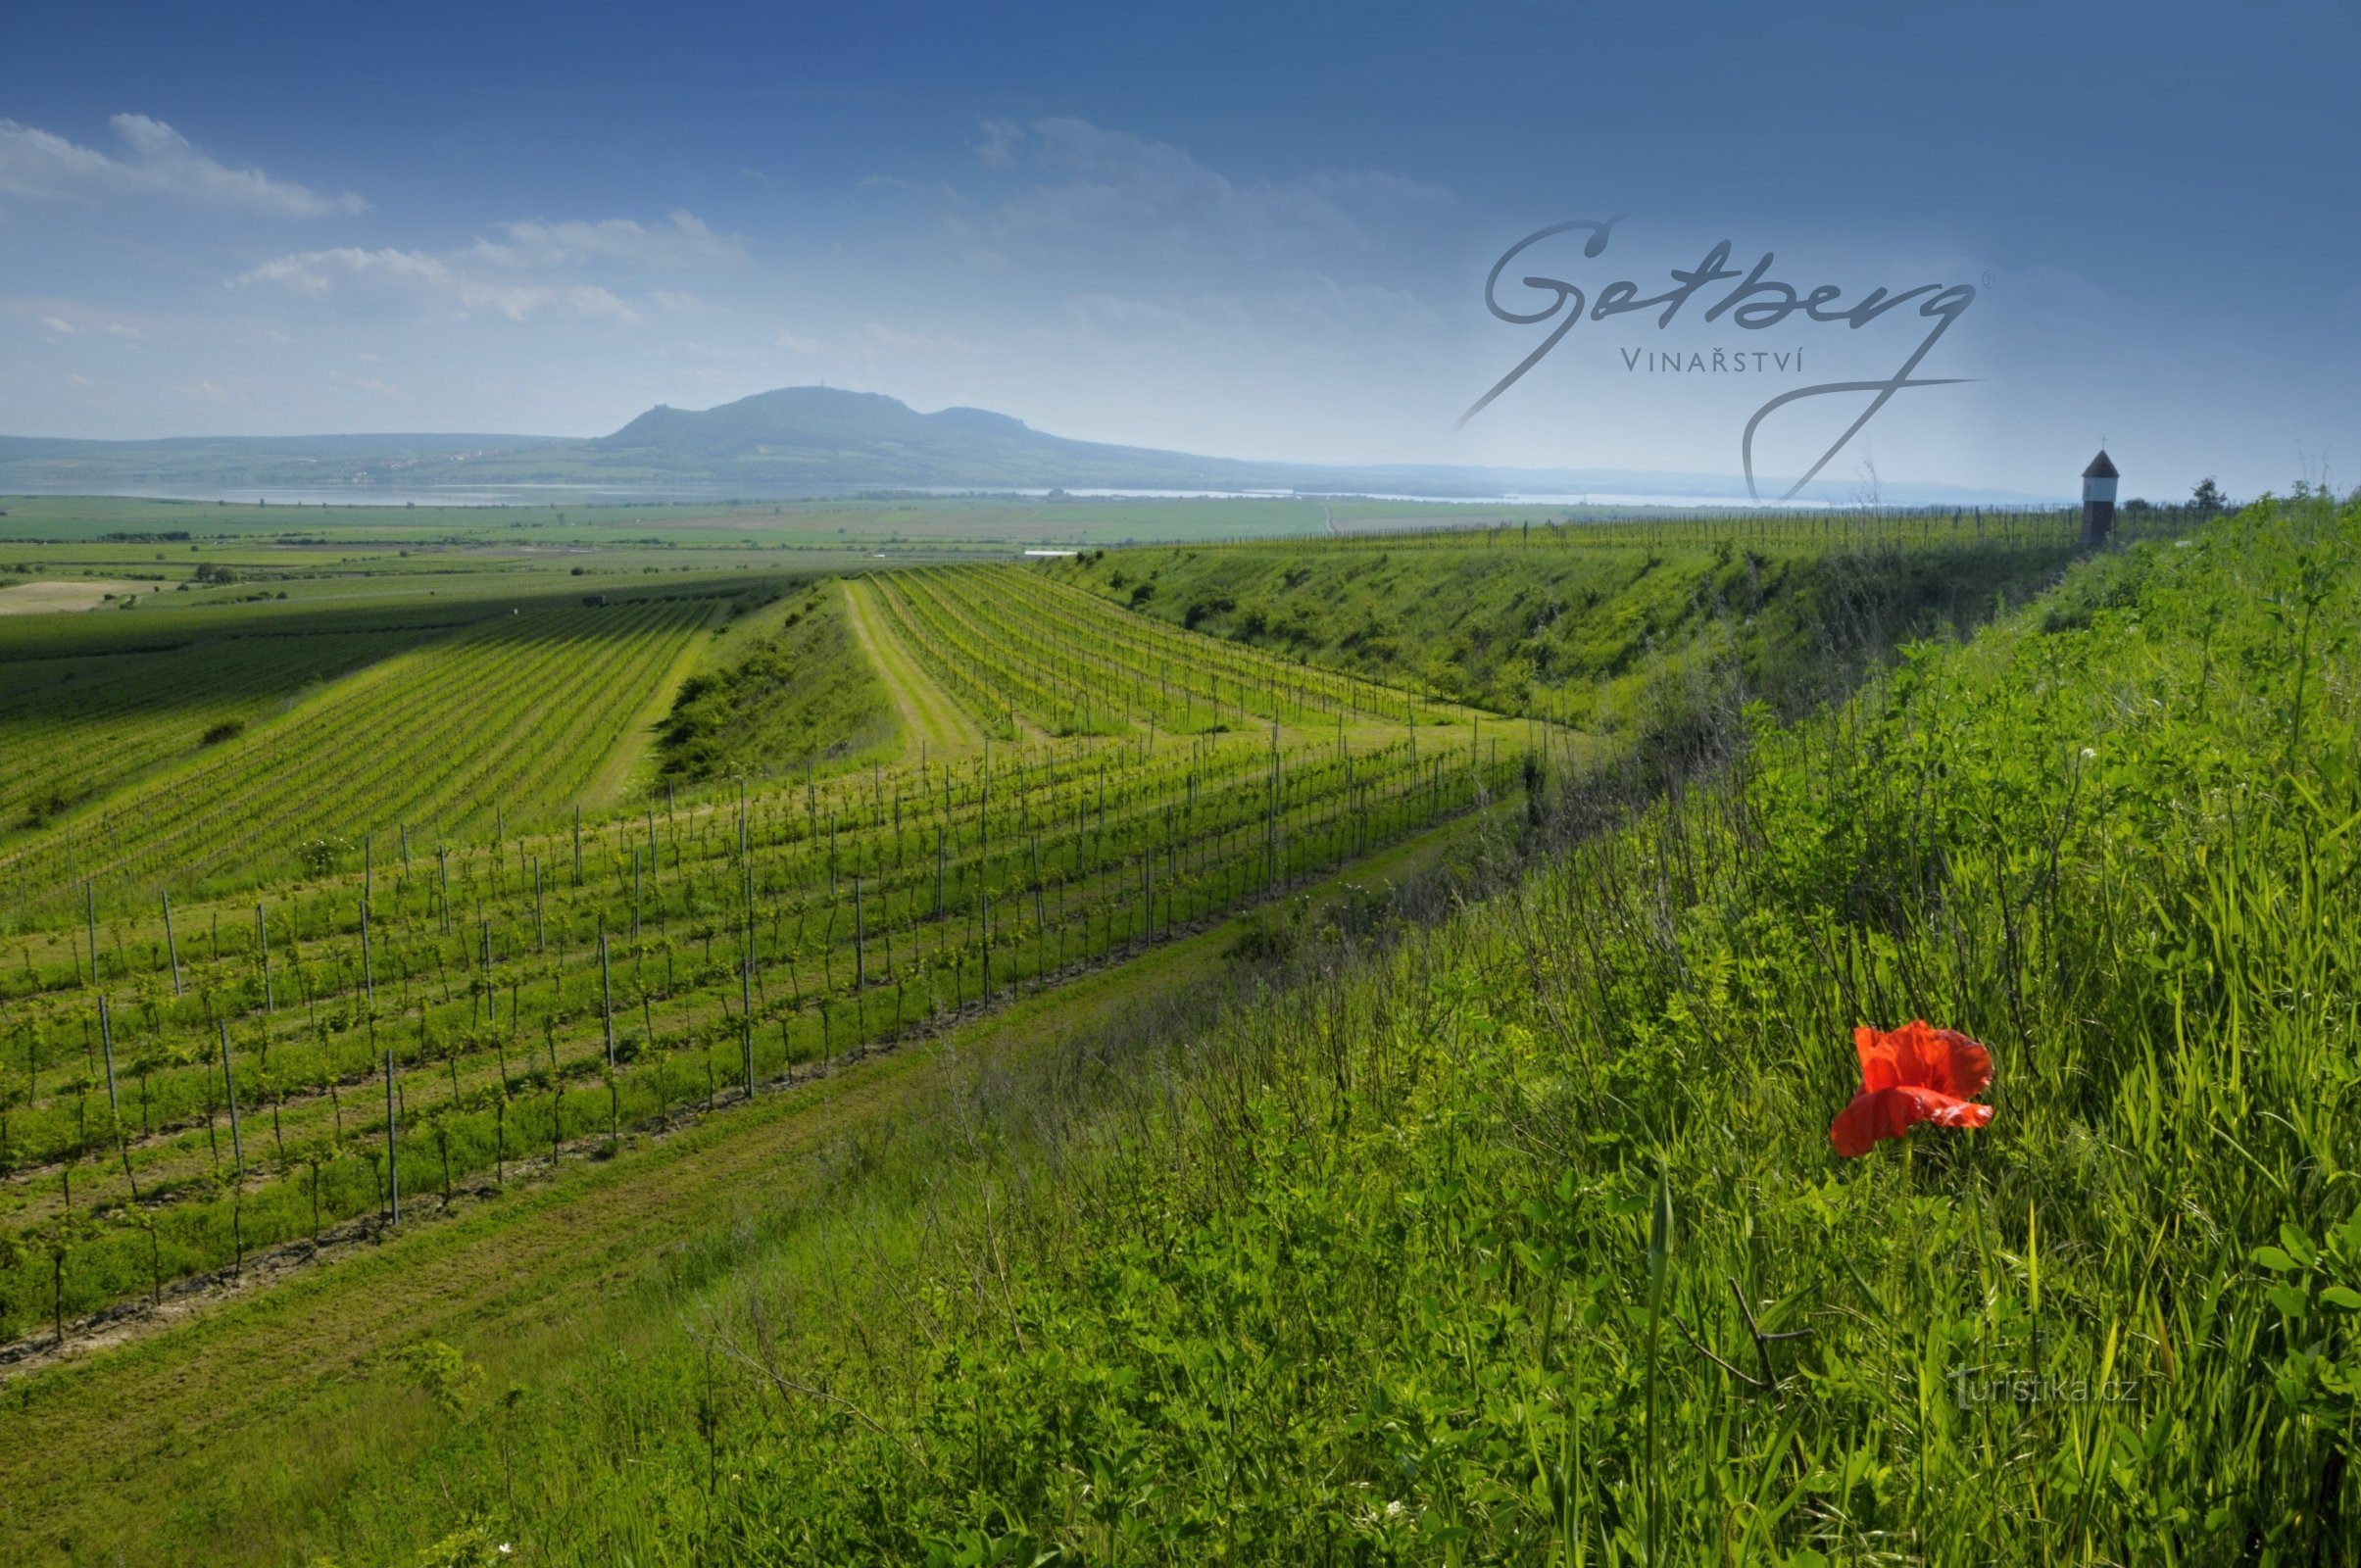 Gotberg winery